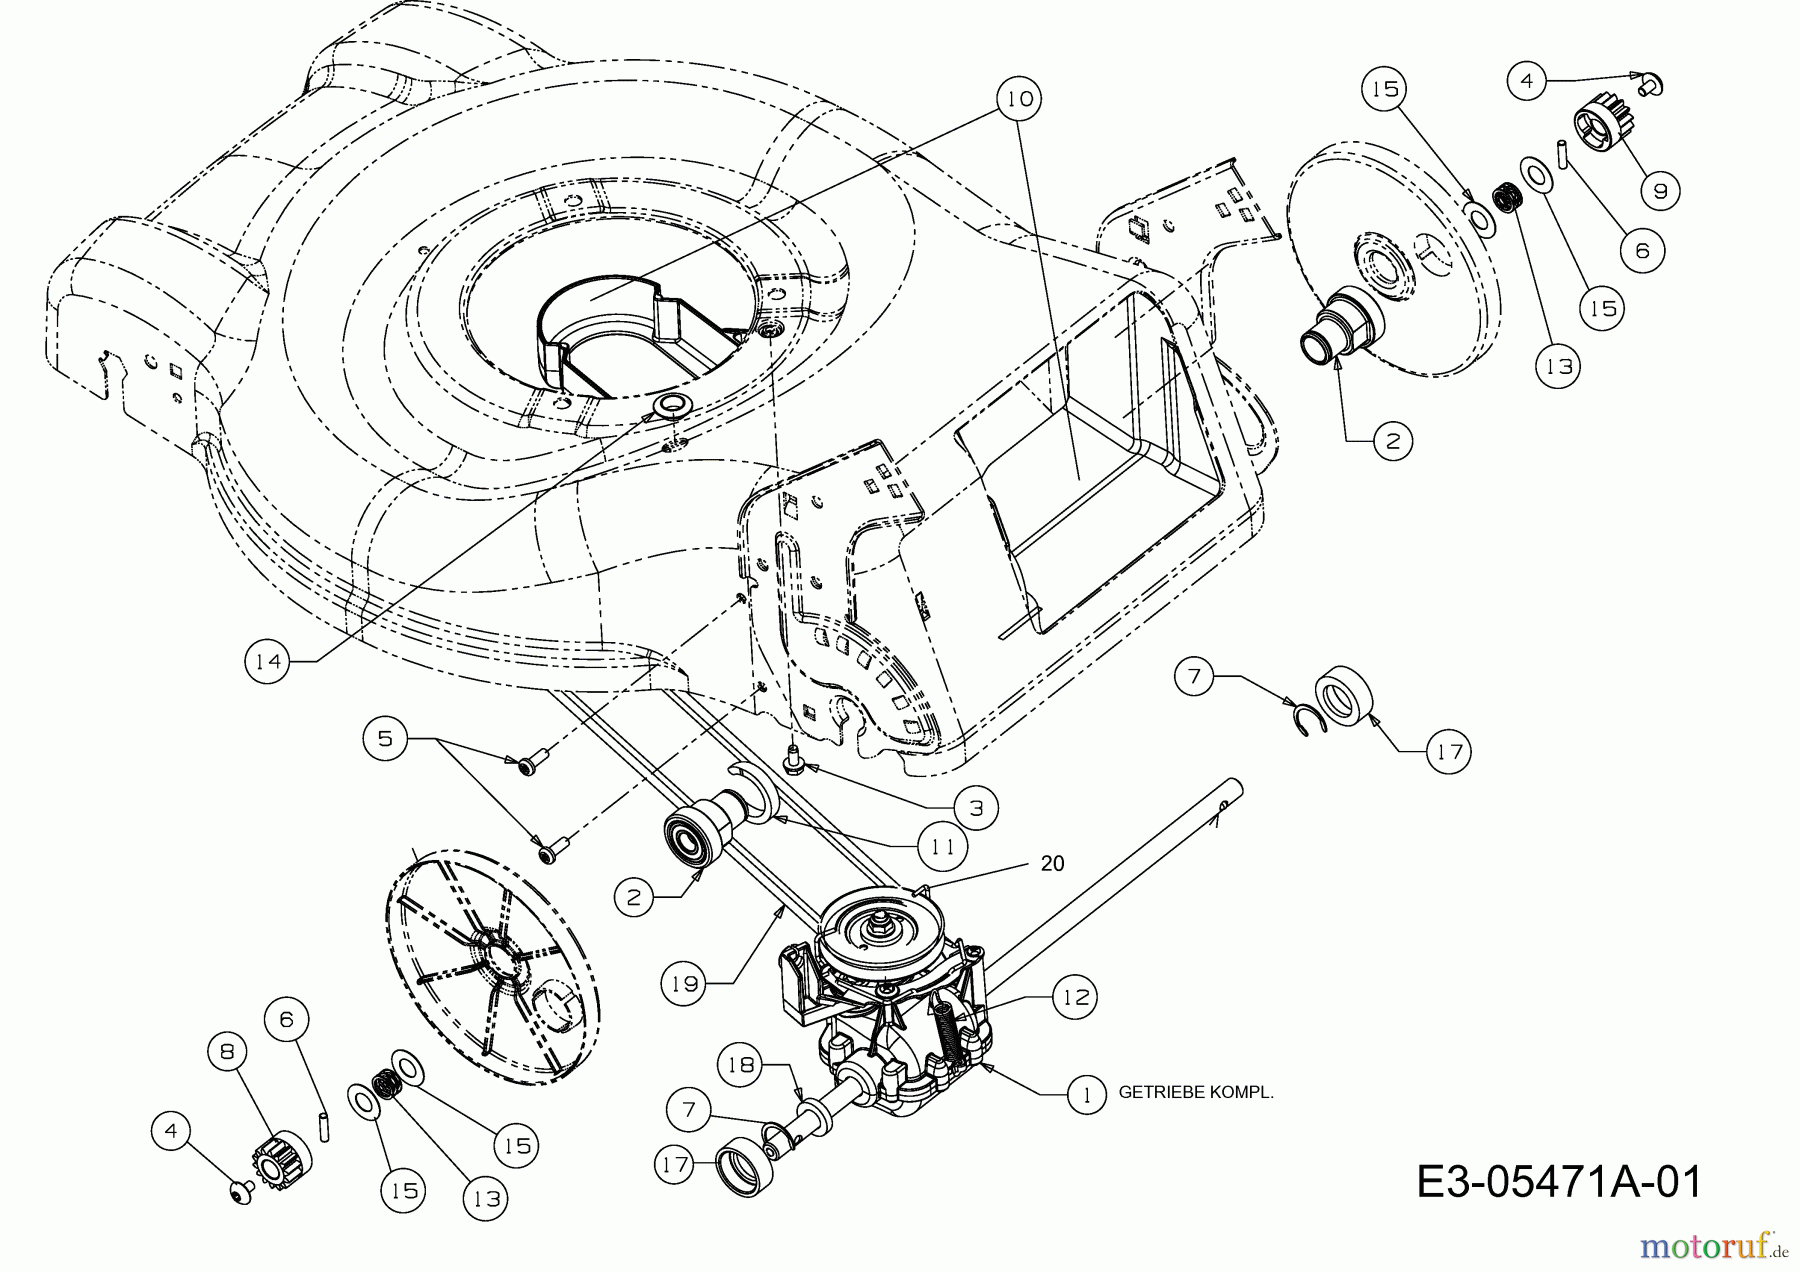  Mr.Gardener Petrol mower self propelled D 4046 T 3 12E-J54M629  (2011) Gearbox